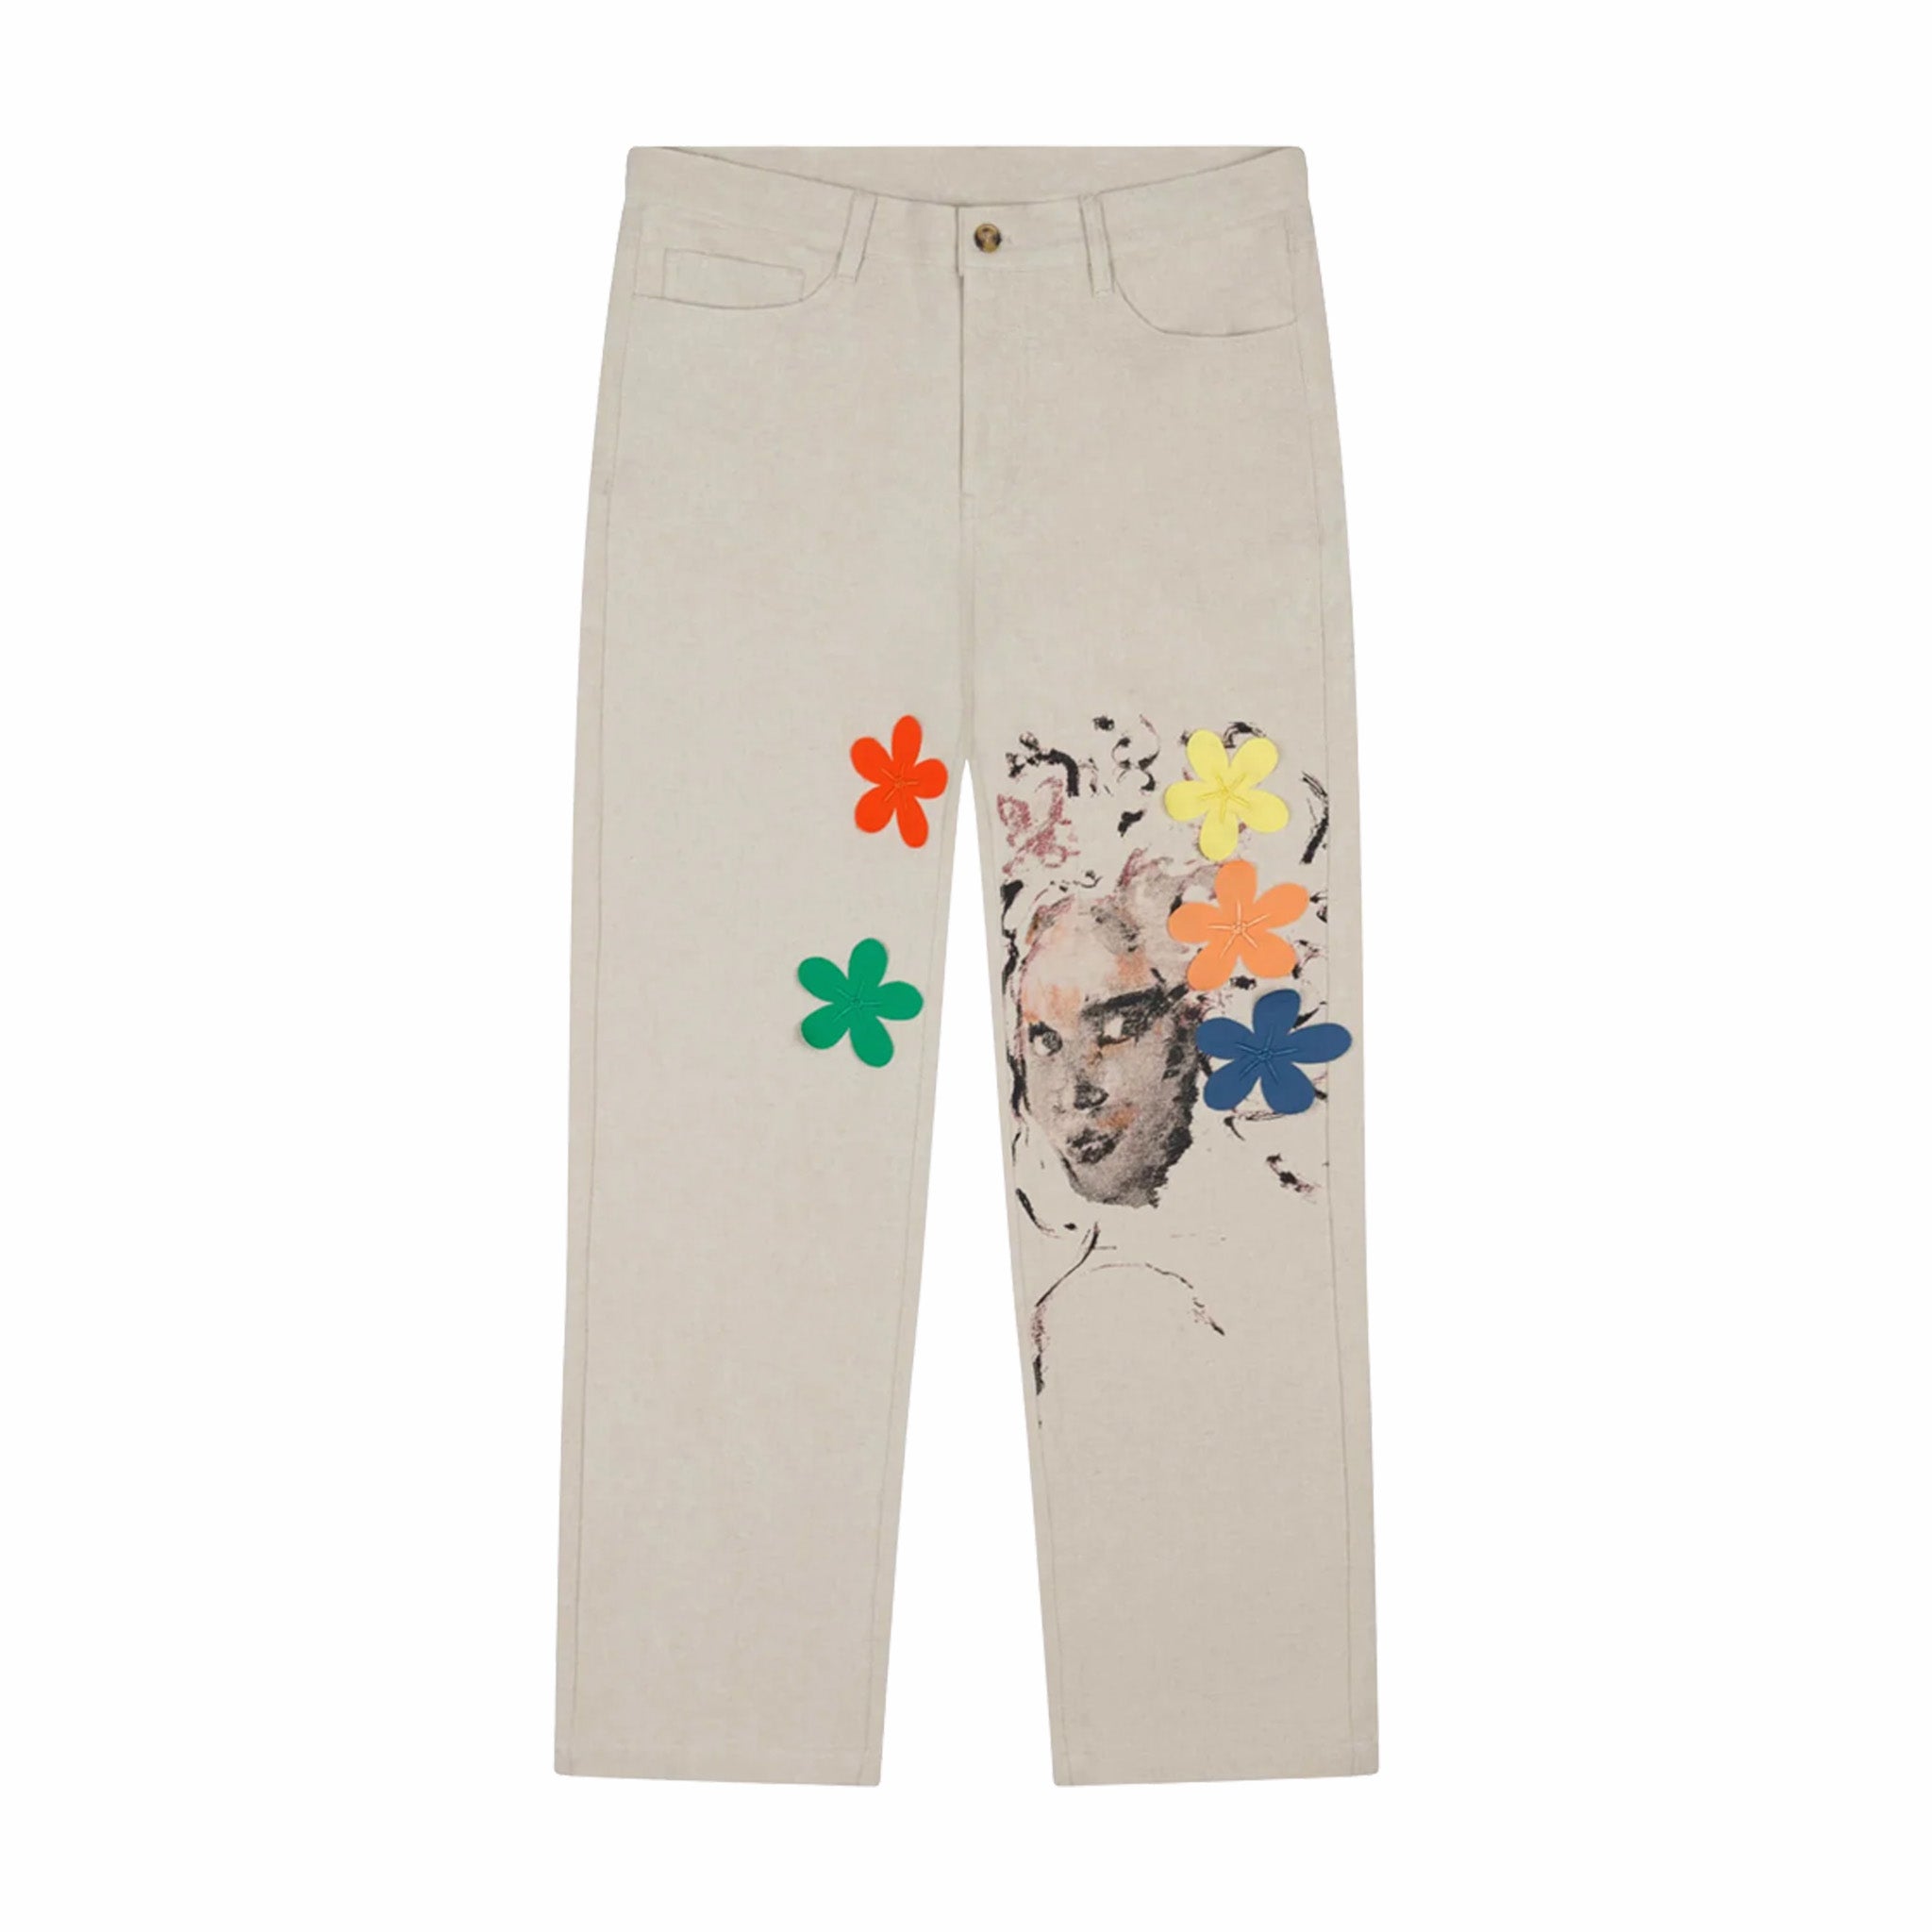 Studi KidSuper, KidSuper Studios Pantaloni della tuta a fiori (naturale)